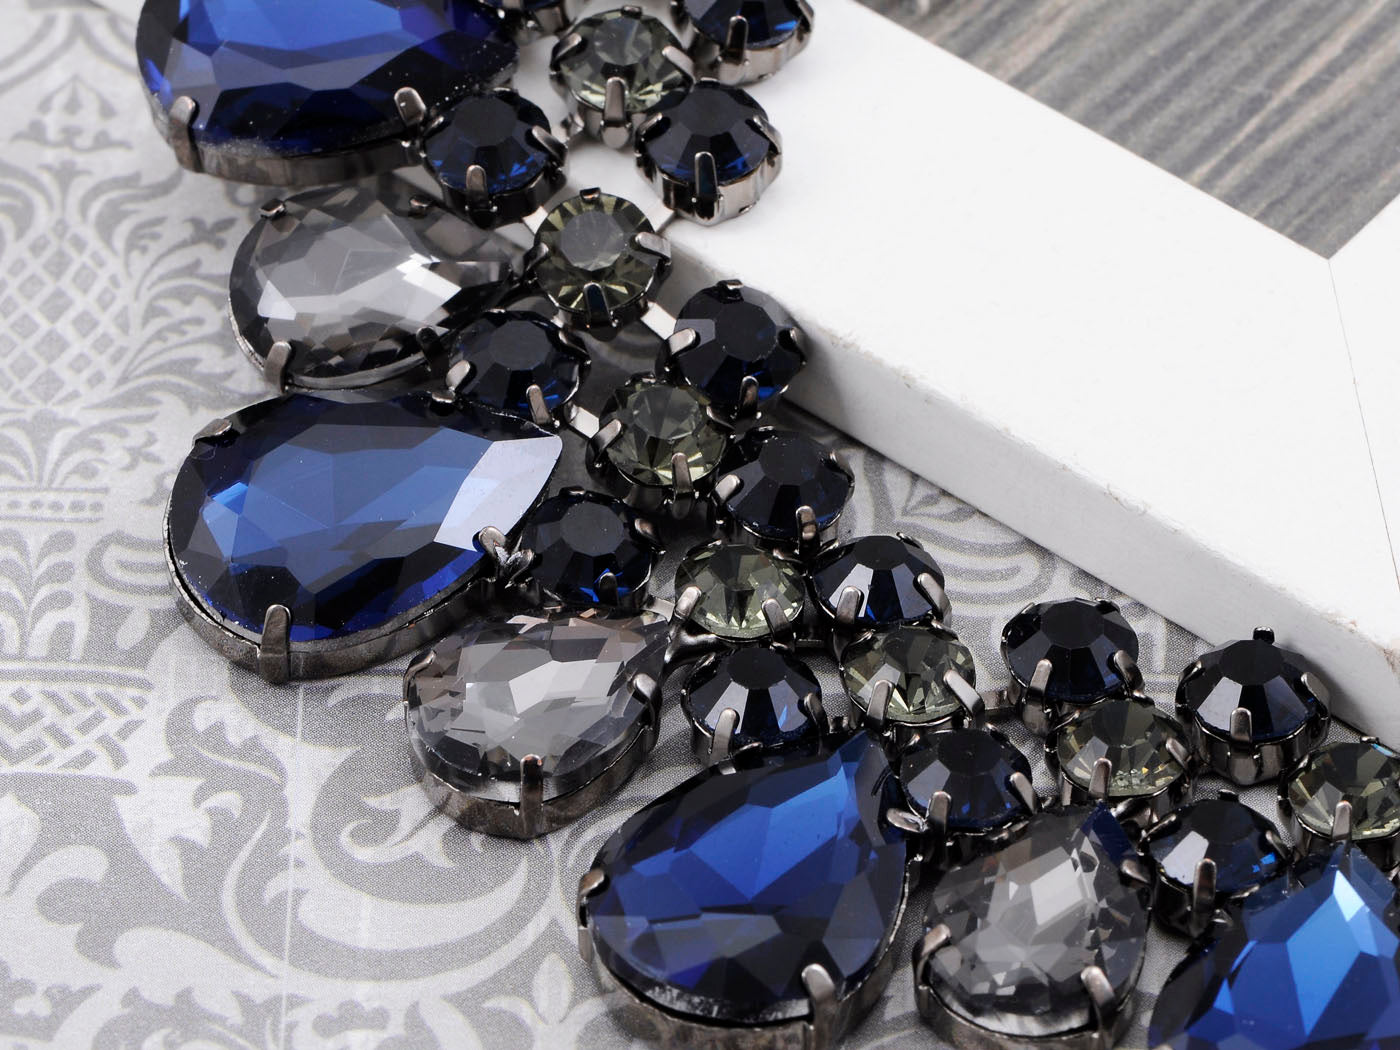 Black Blue Diamond Bead Transparent Collar Necklace